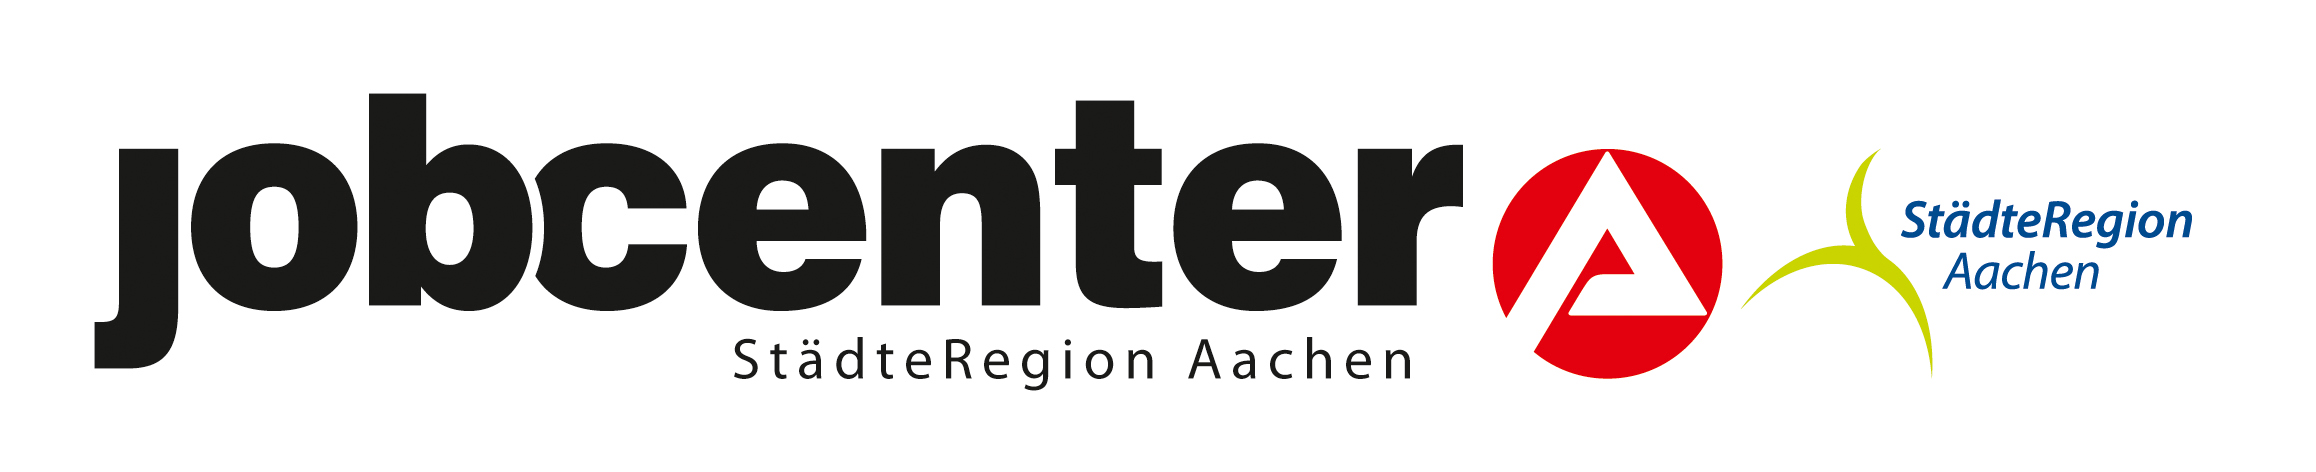 Logo des Jobcenters StädteRegion Aachen